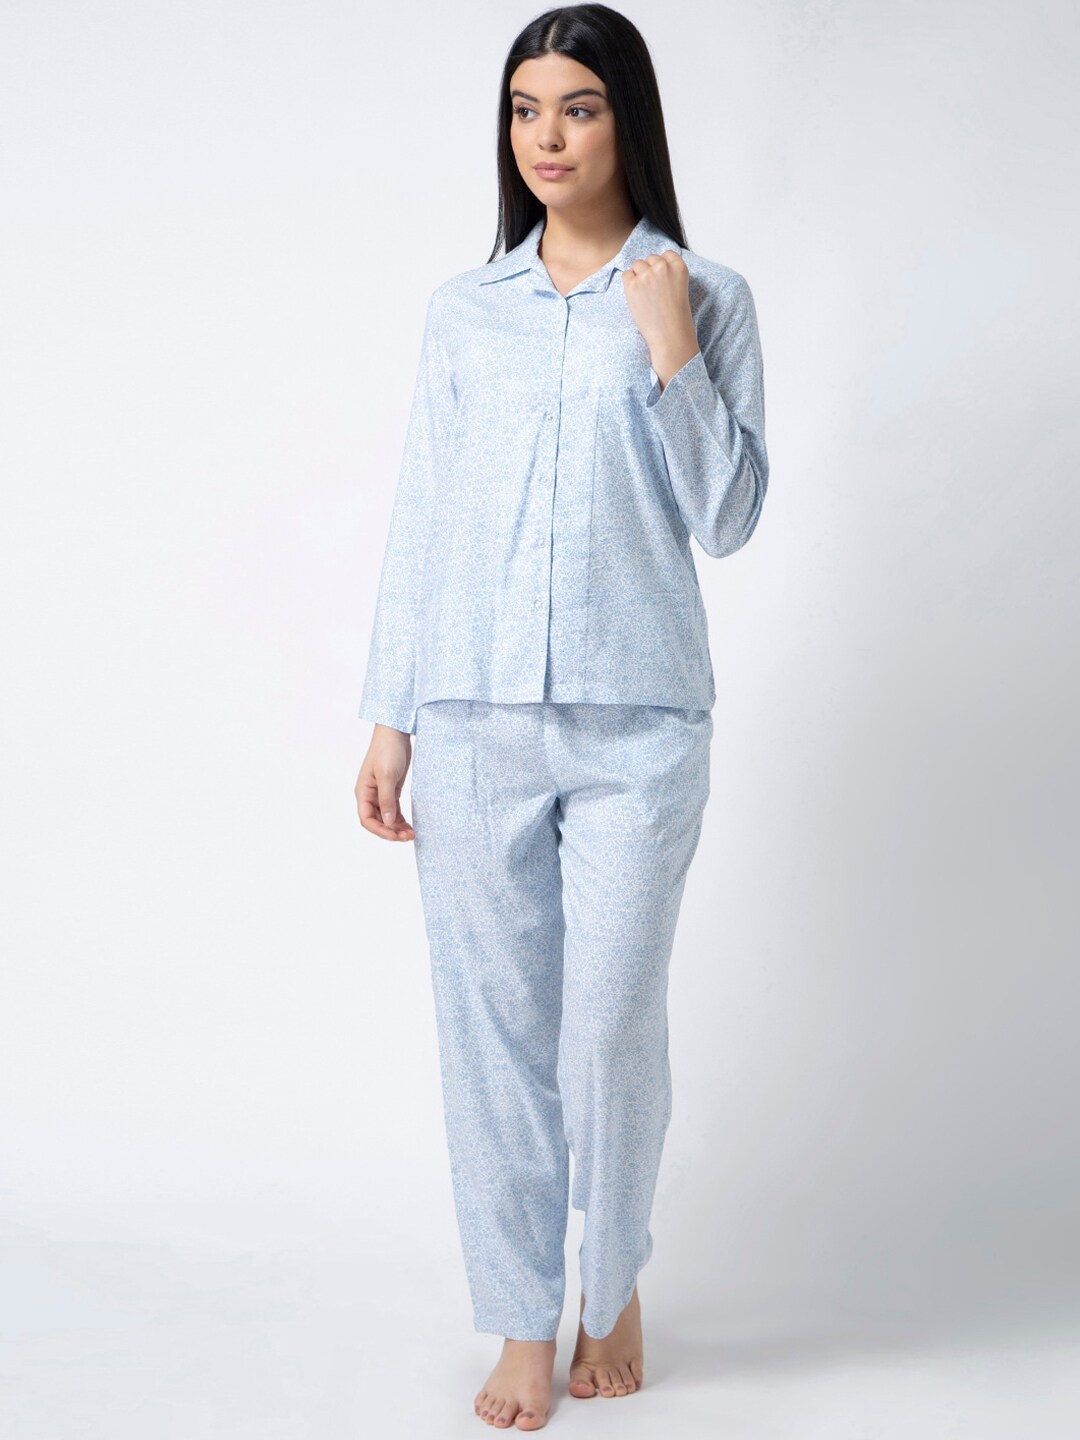 ADORENITE Women White & Blue Printed Night suit Price in India